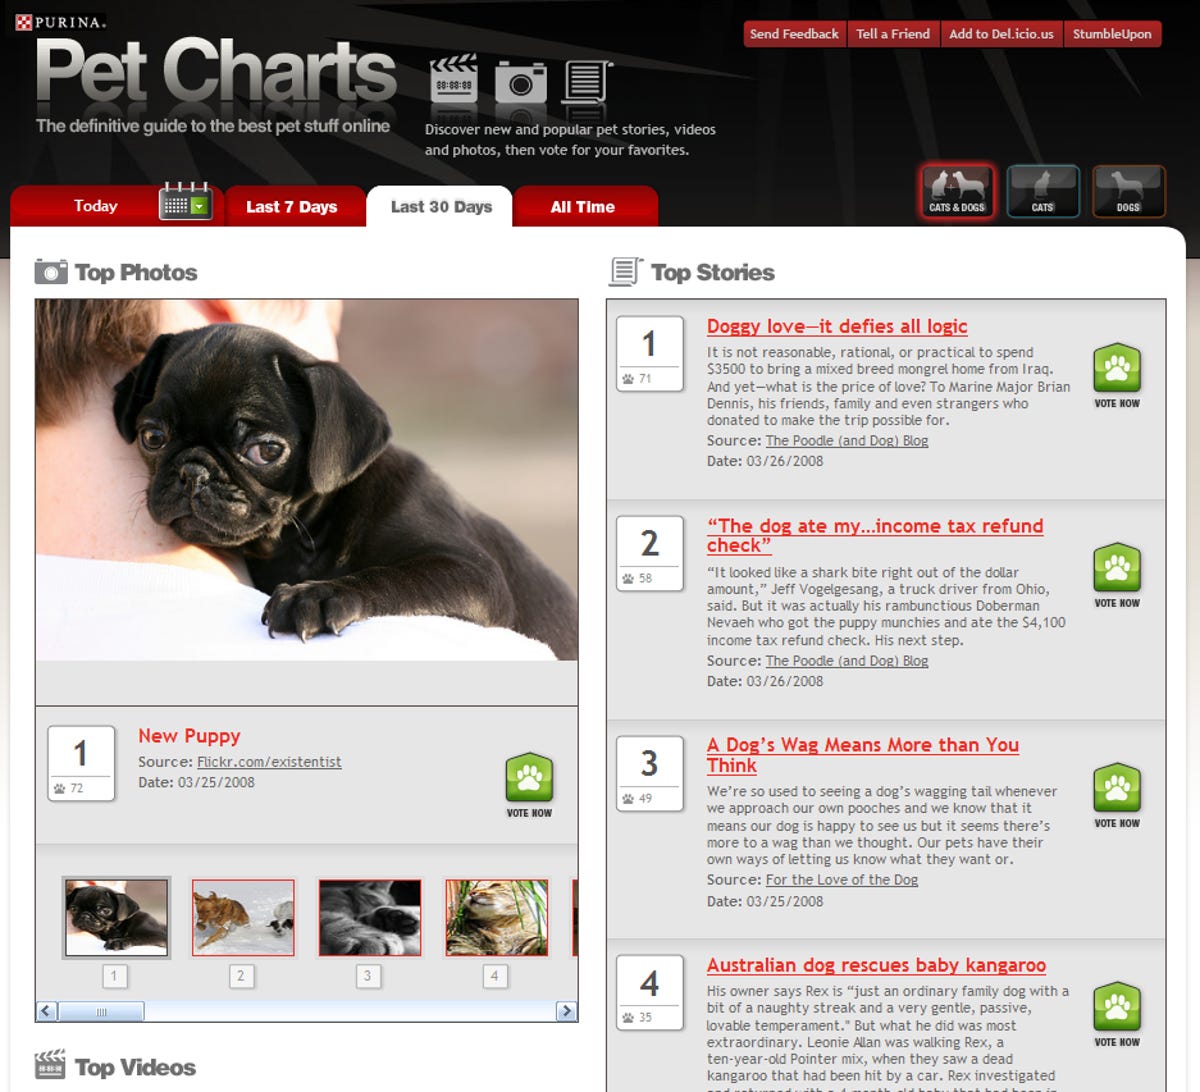 Purina Pet Charts